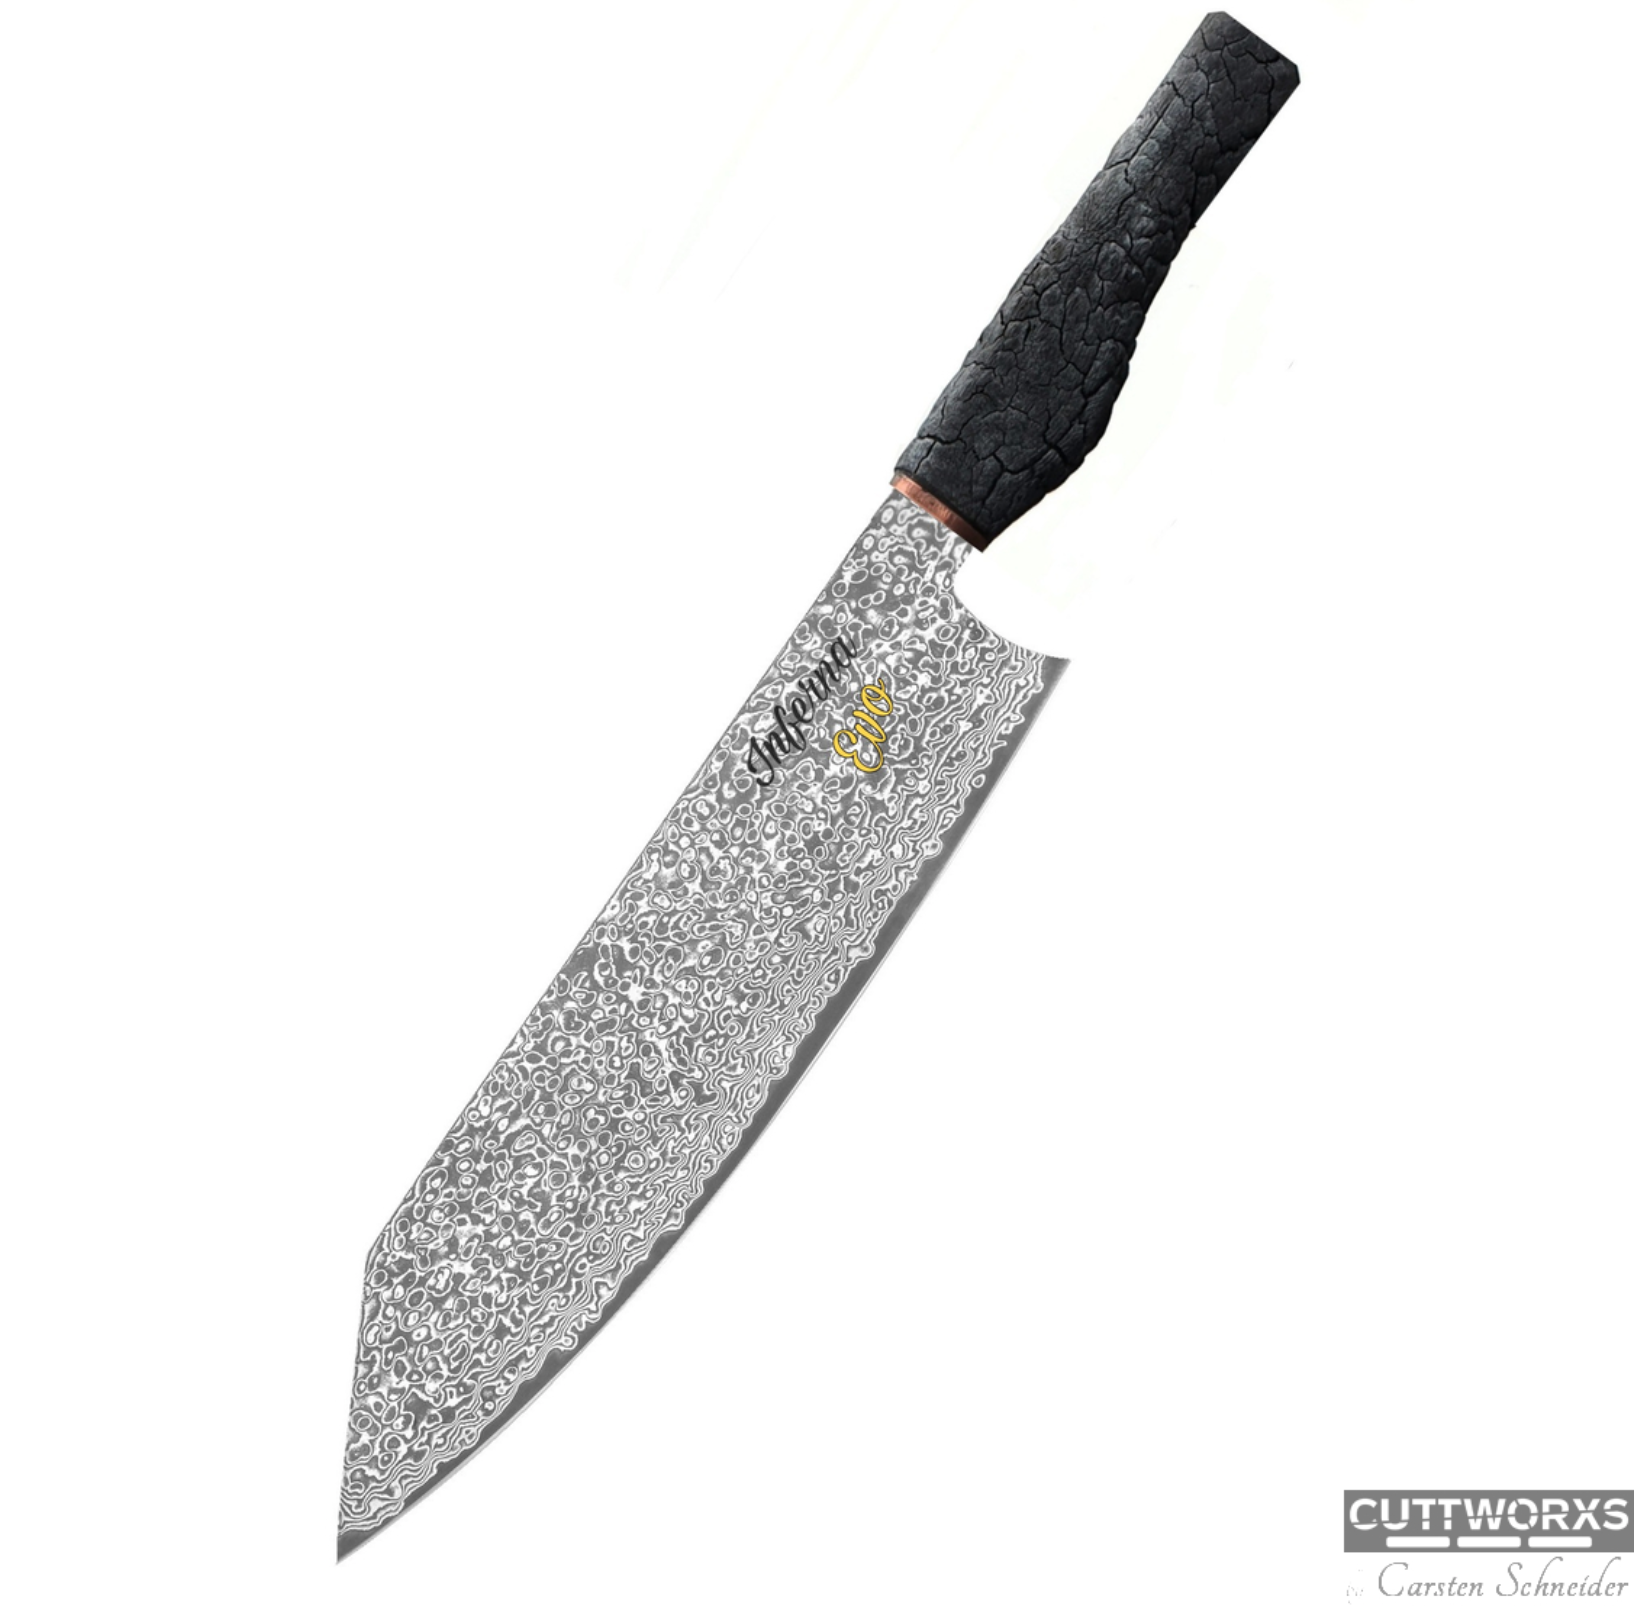 Cuttworxs Inferna Raptor chef's knife